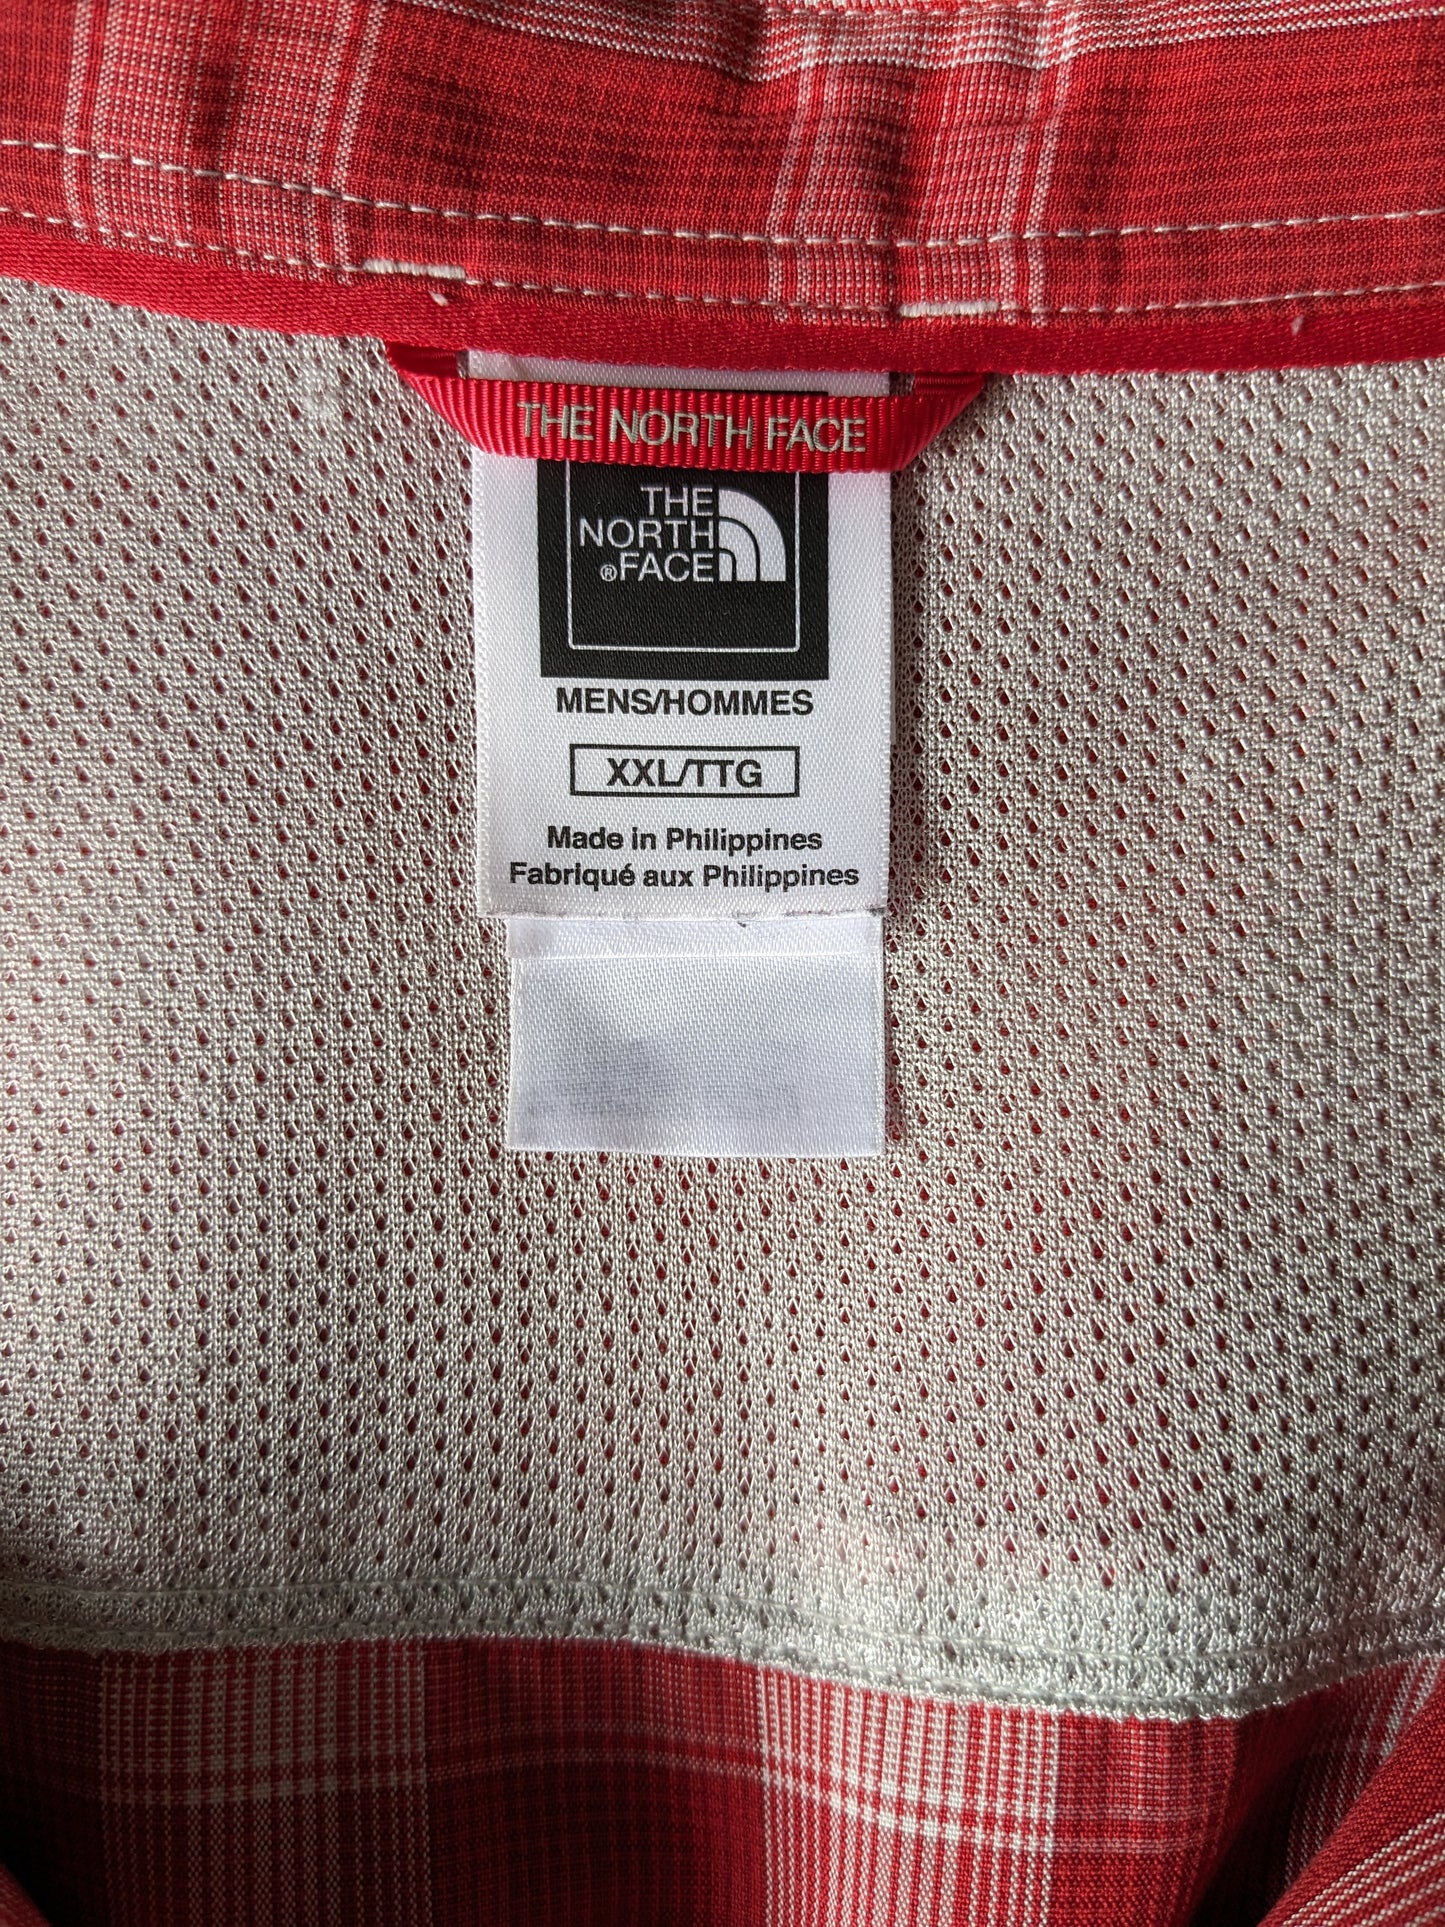 The North Face outdoor overhemd korte mouw. Rood Wit geruit. Maat 2XL / XXL.